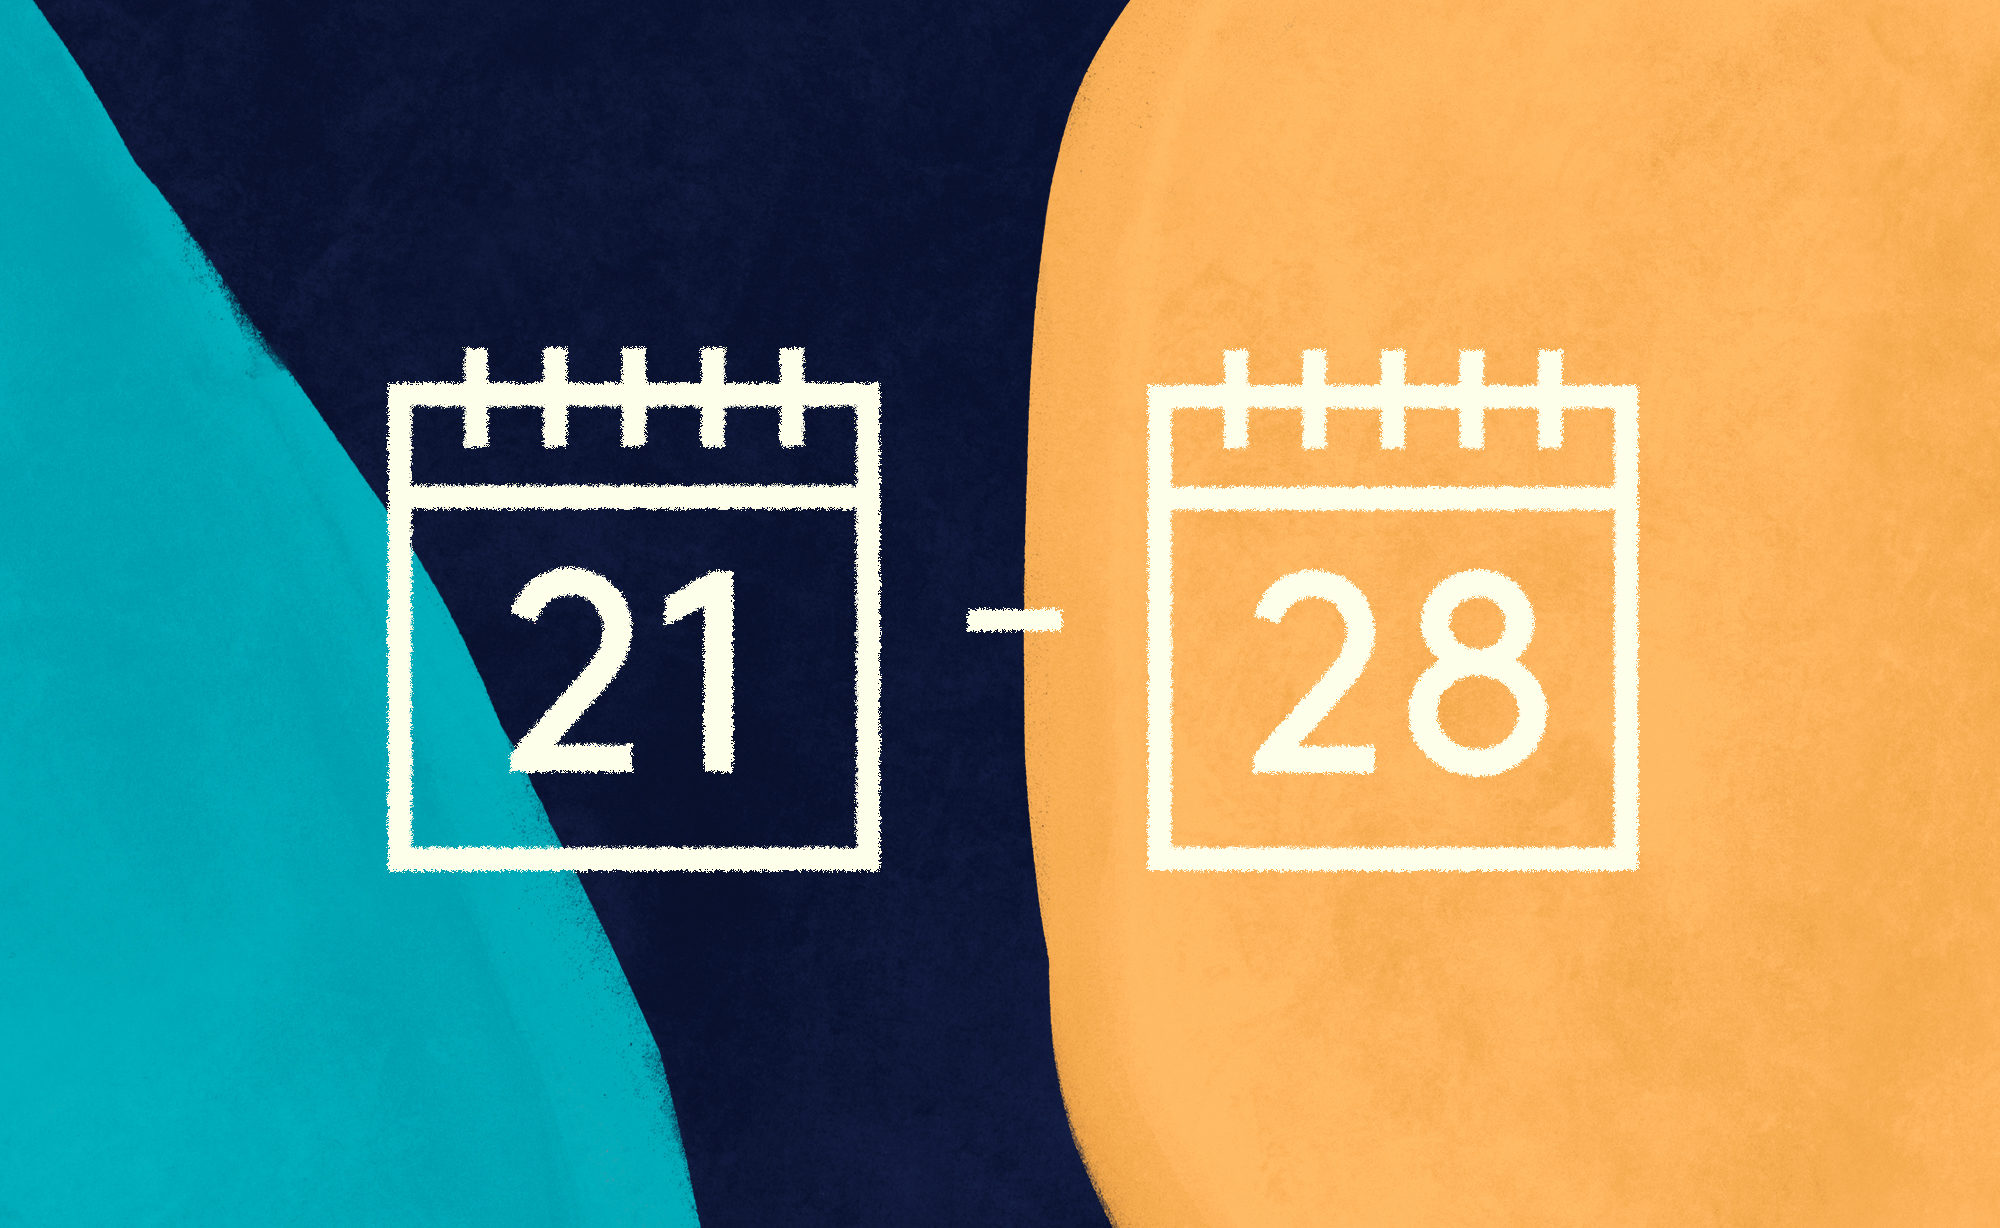 Date range calendar icon overlaid on a textured dark blue, orange and turquoise background